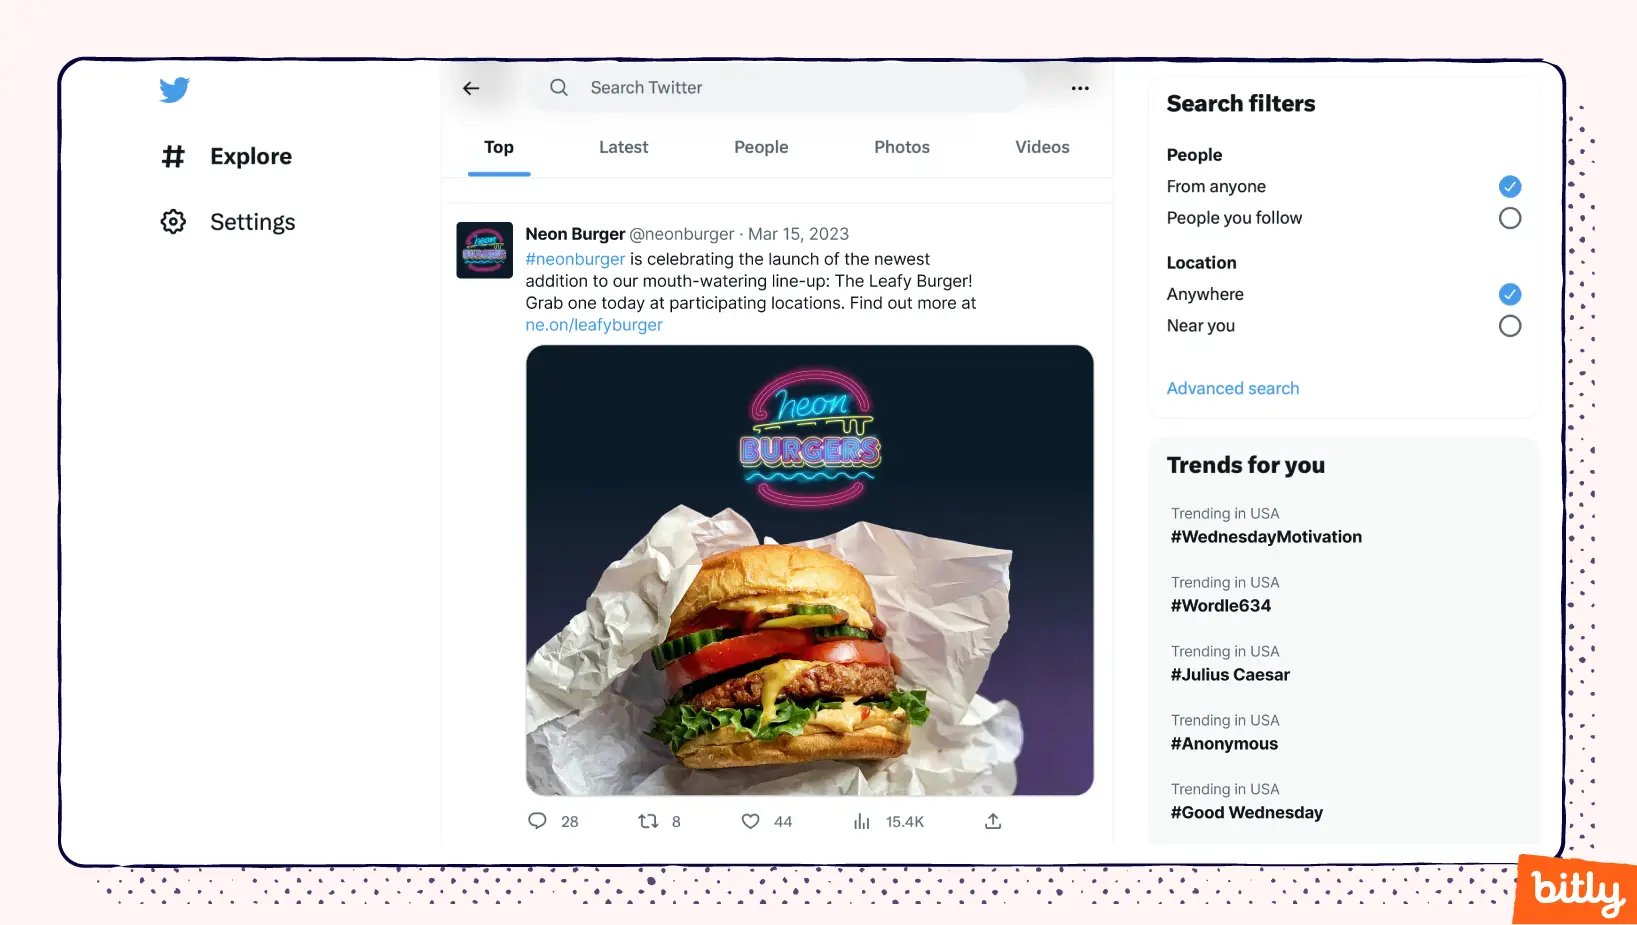 A tweet from Neon Burger announcing a new burger on their menu.